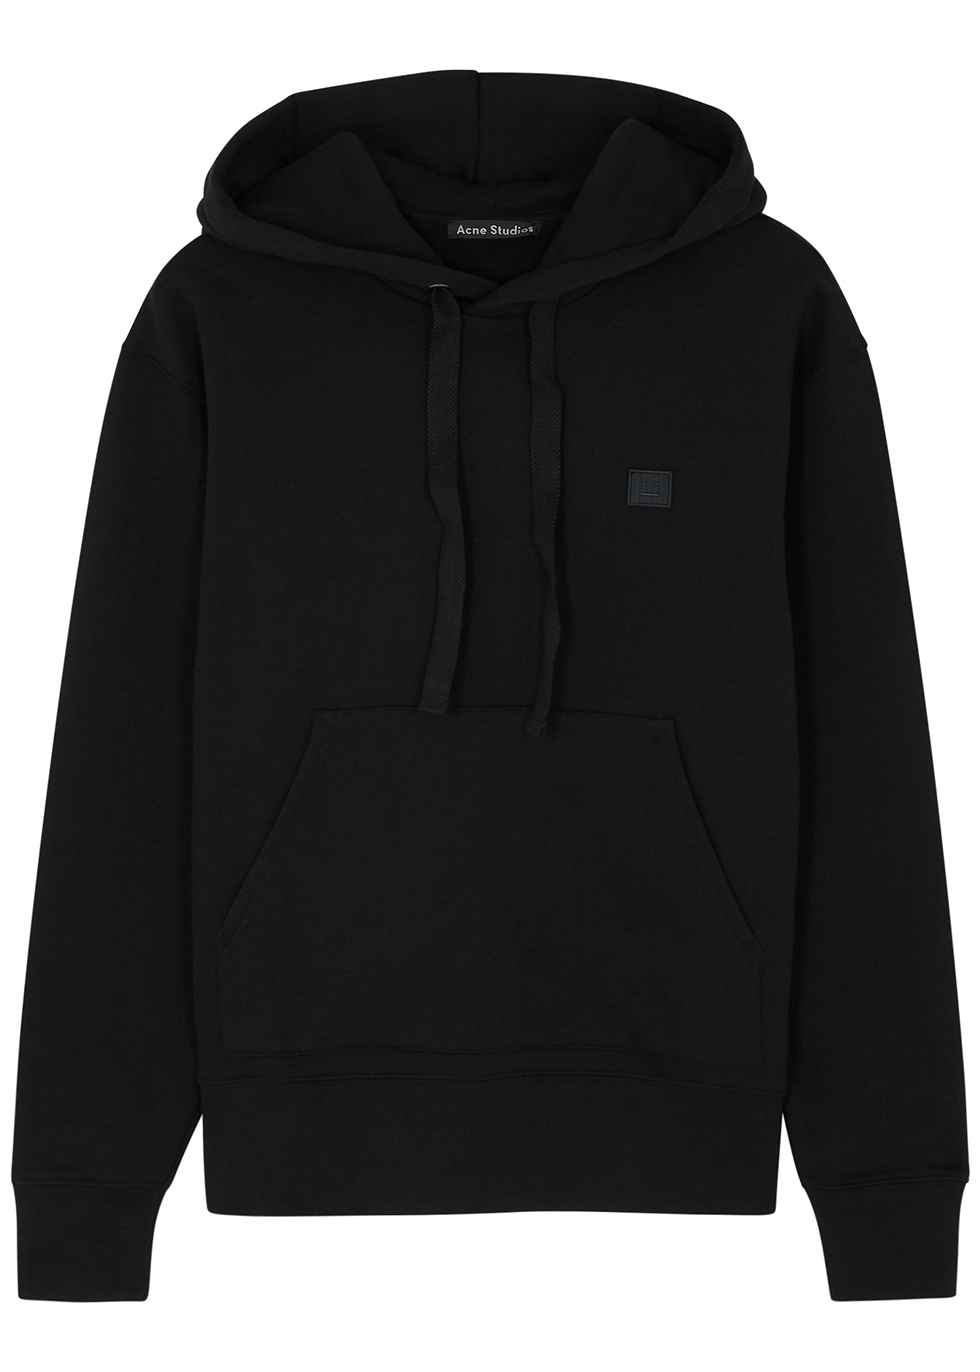 acne studios sweatshirt black